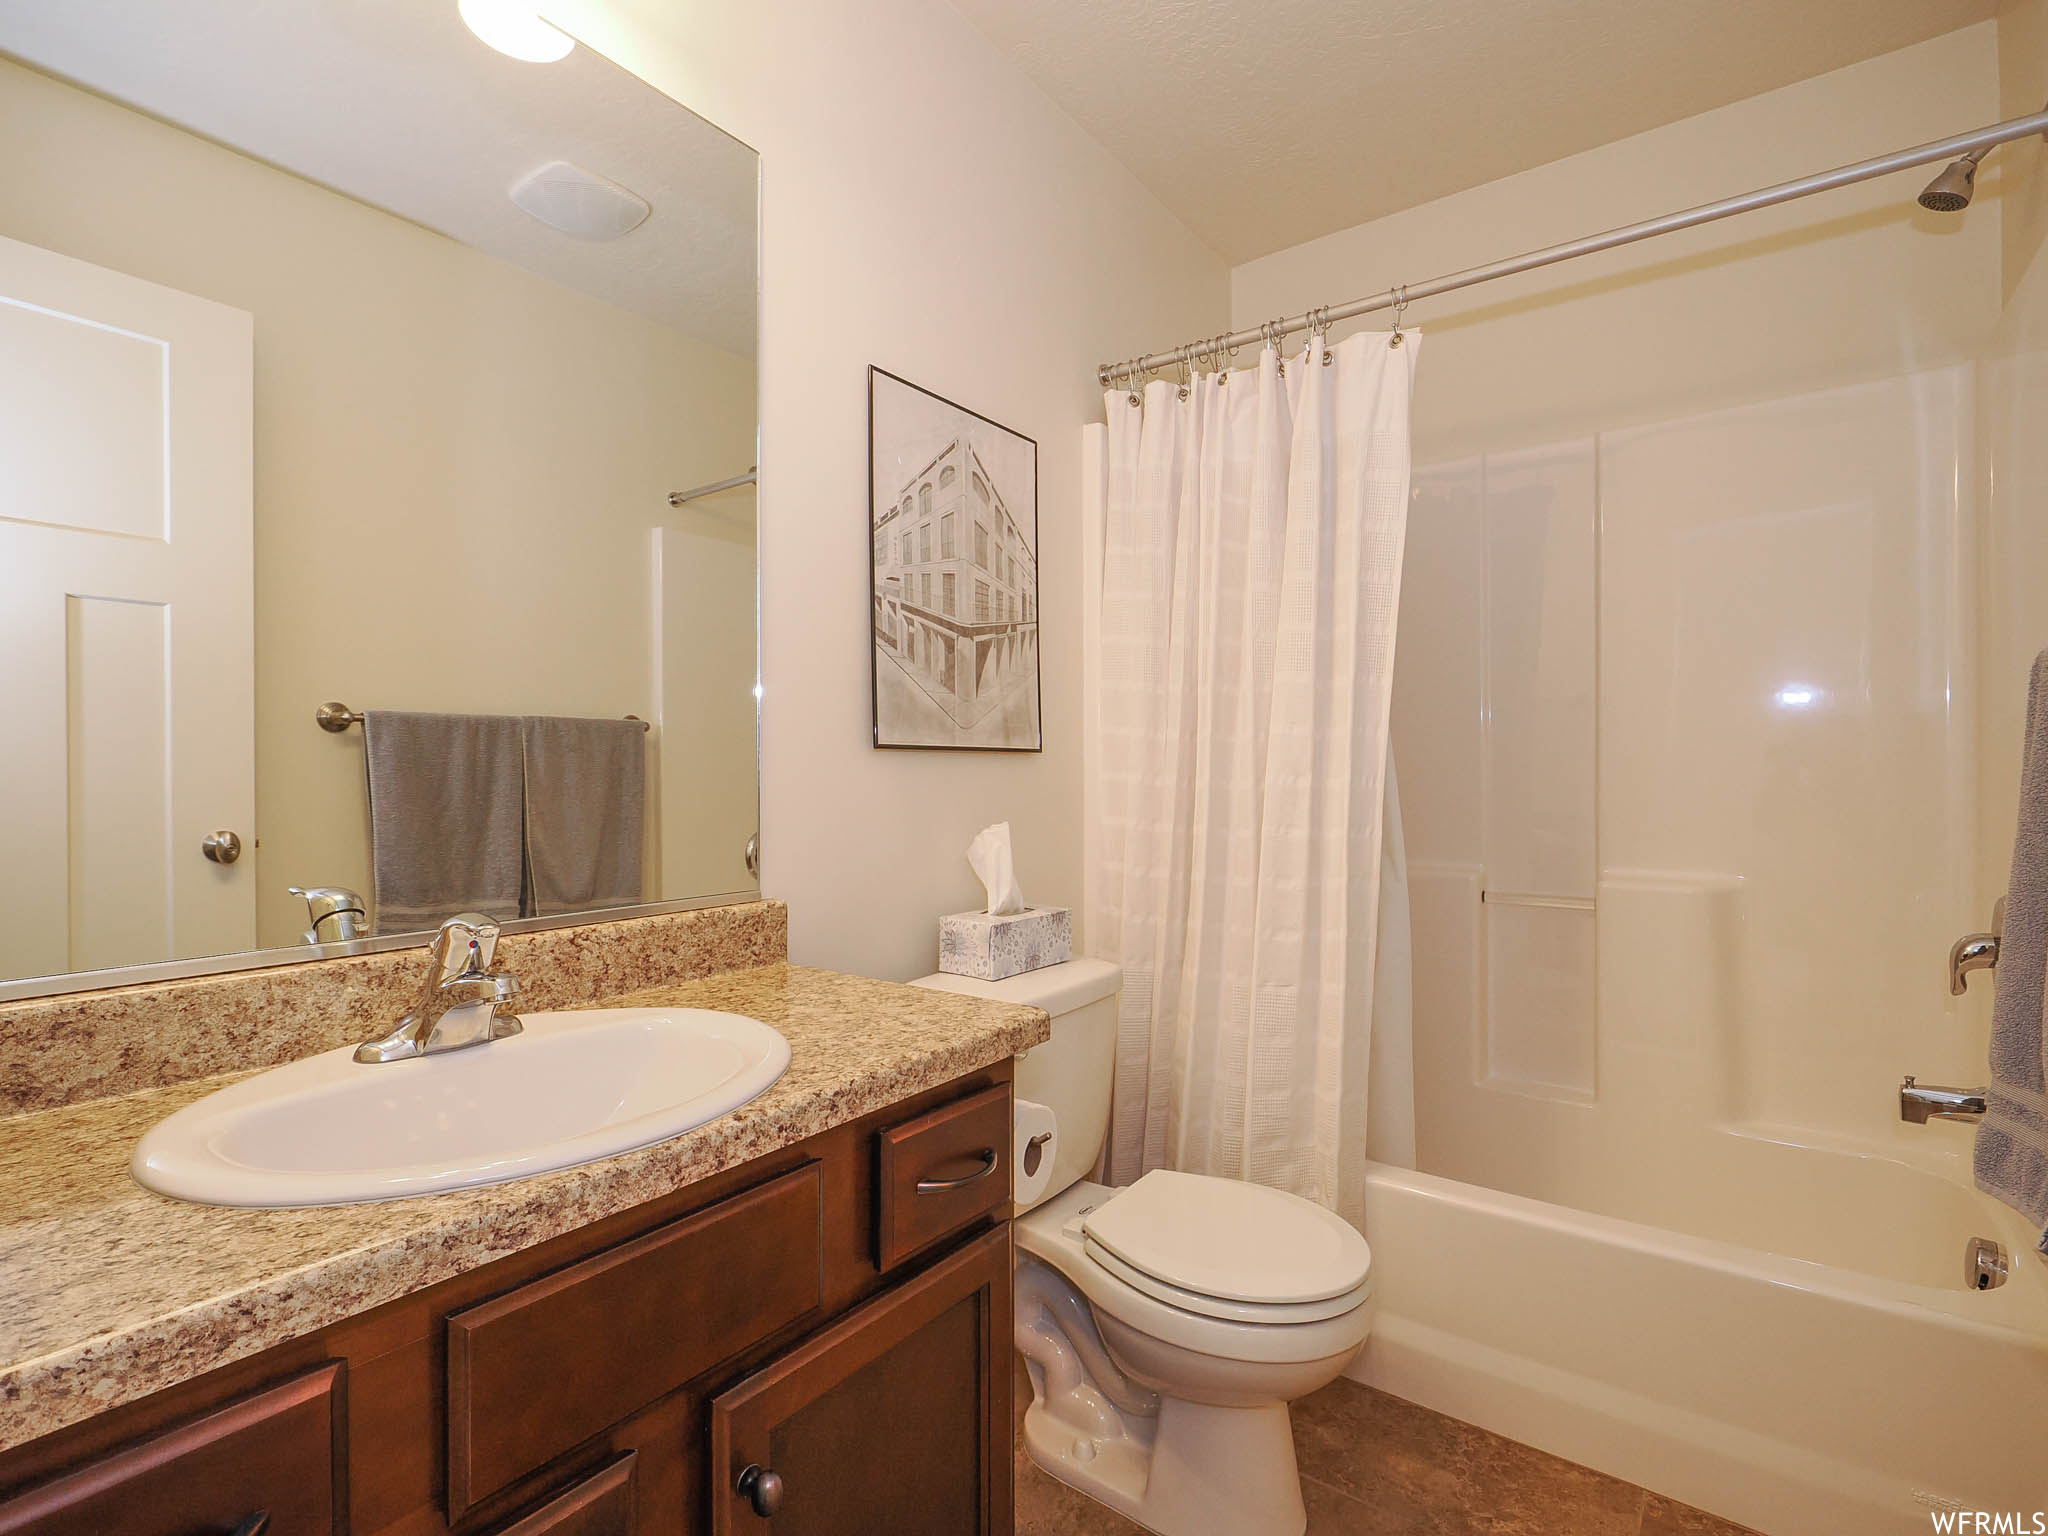 Full bathroom featuring oversized vanity, shower / bath combo, mirror, and light tile flooring